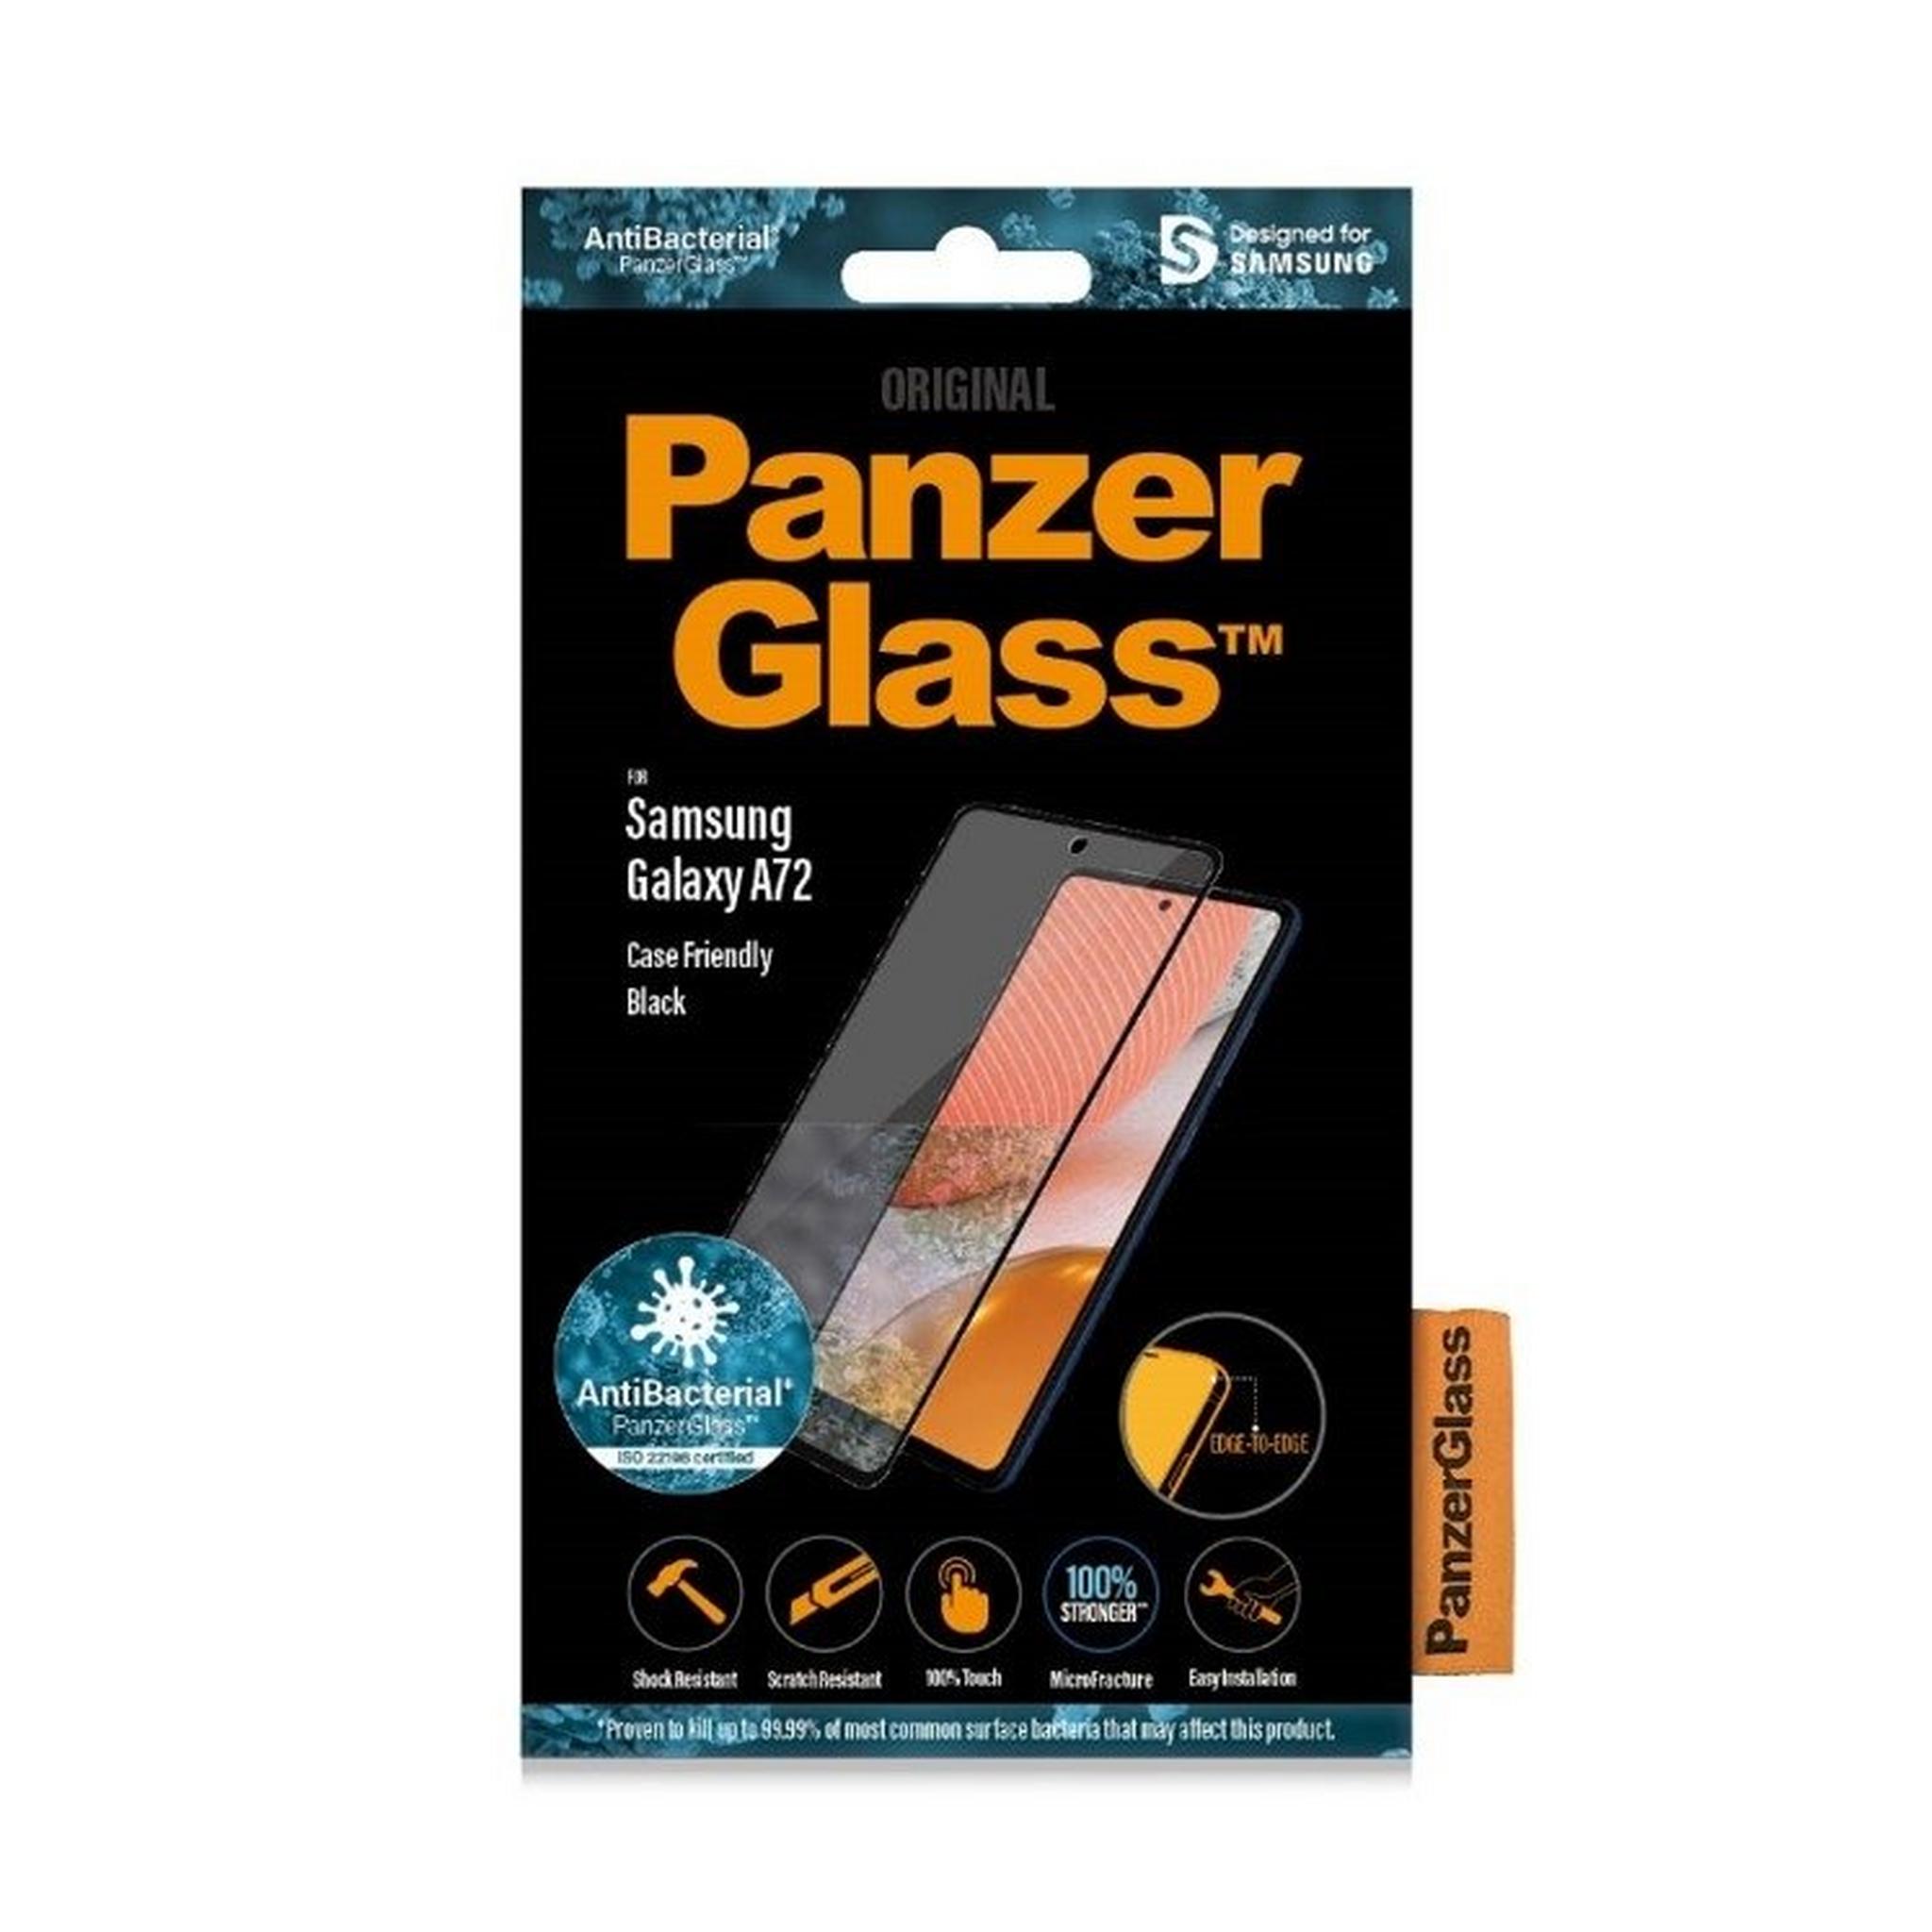 PanzerGlass Samsung Galaxy A72 Screen Protector - Black